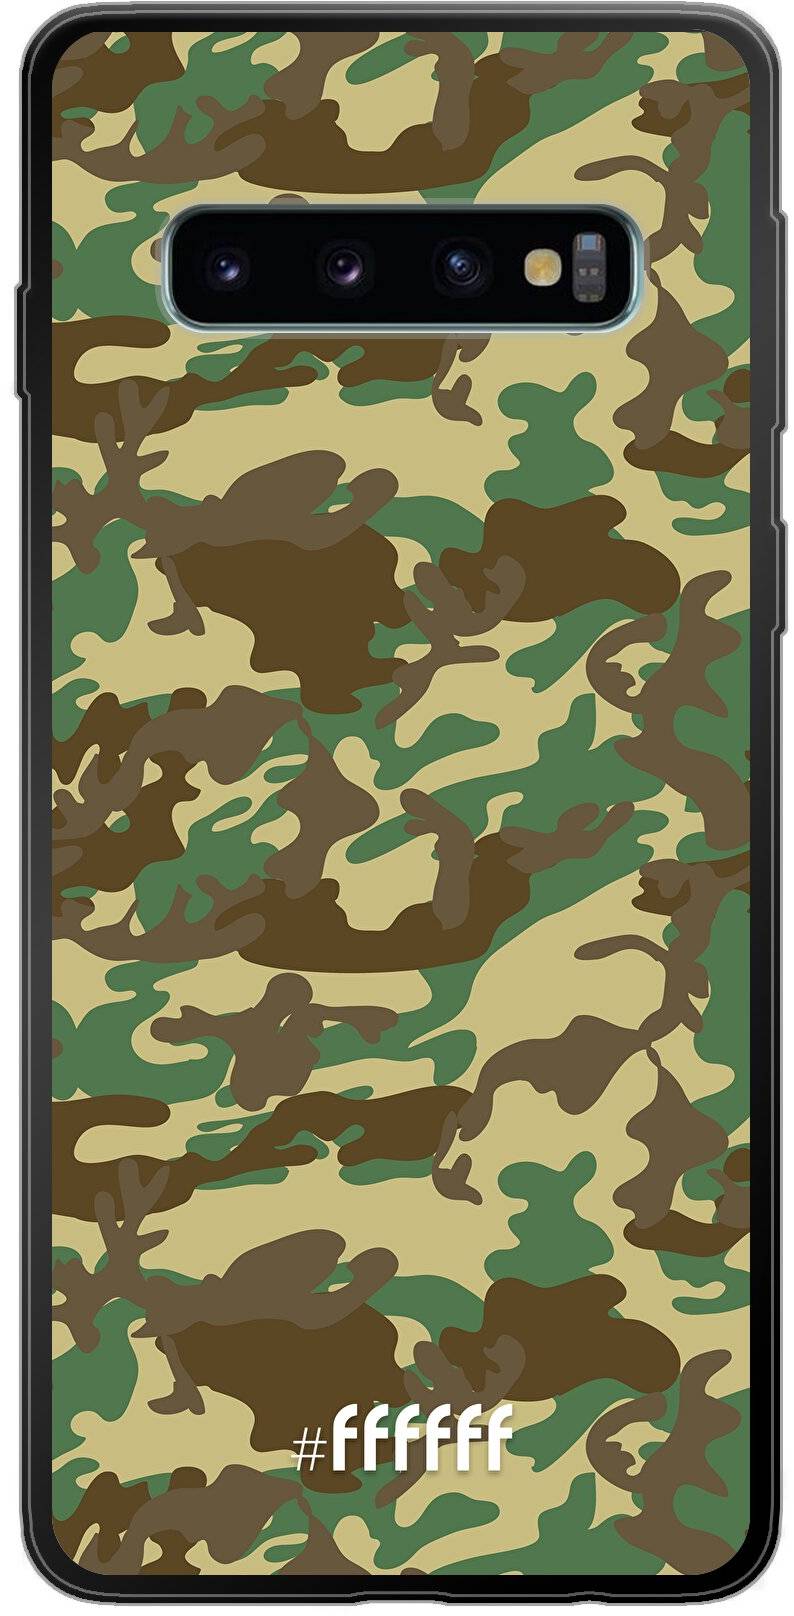 Jungle Camouflage Galaxy S10